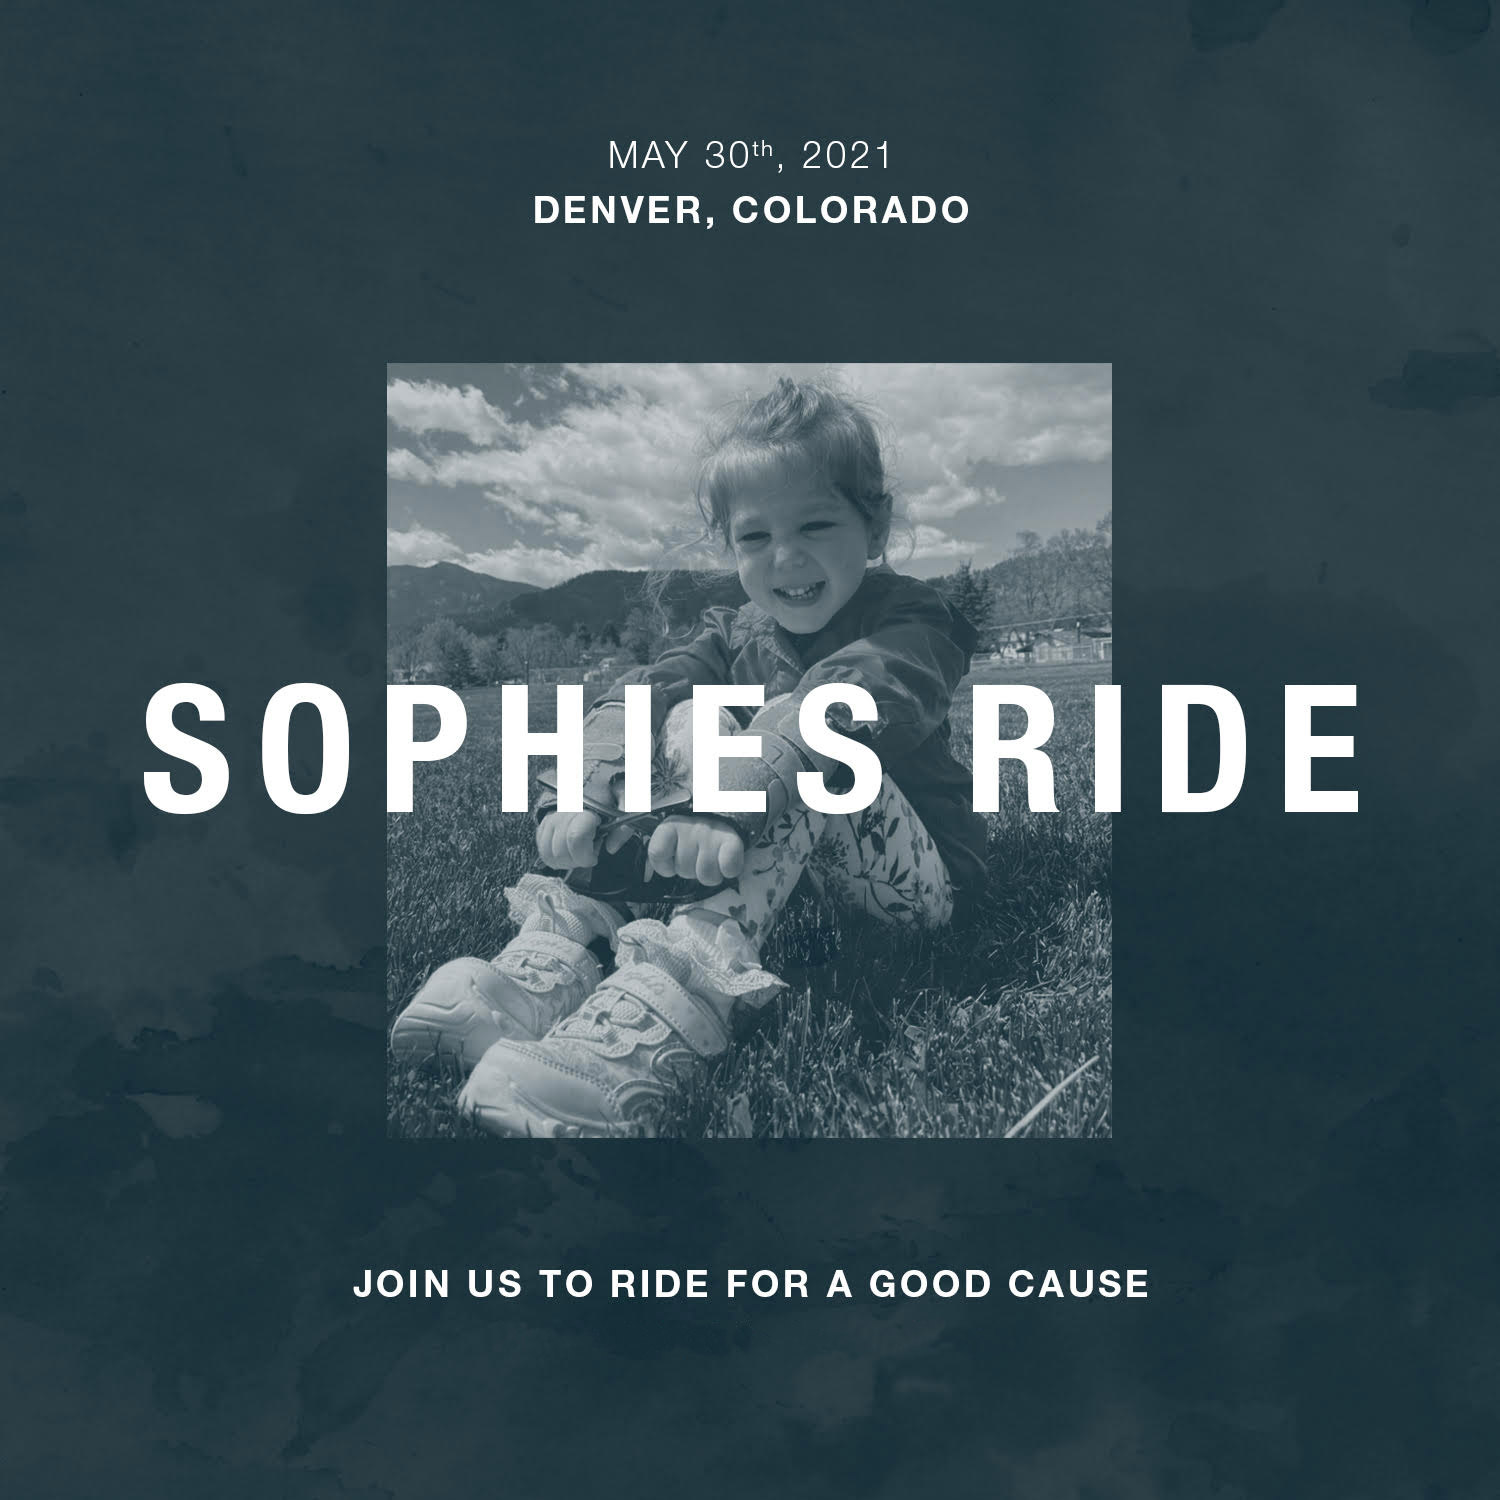 Sophie's Ride motoryclce run